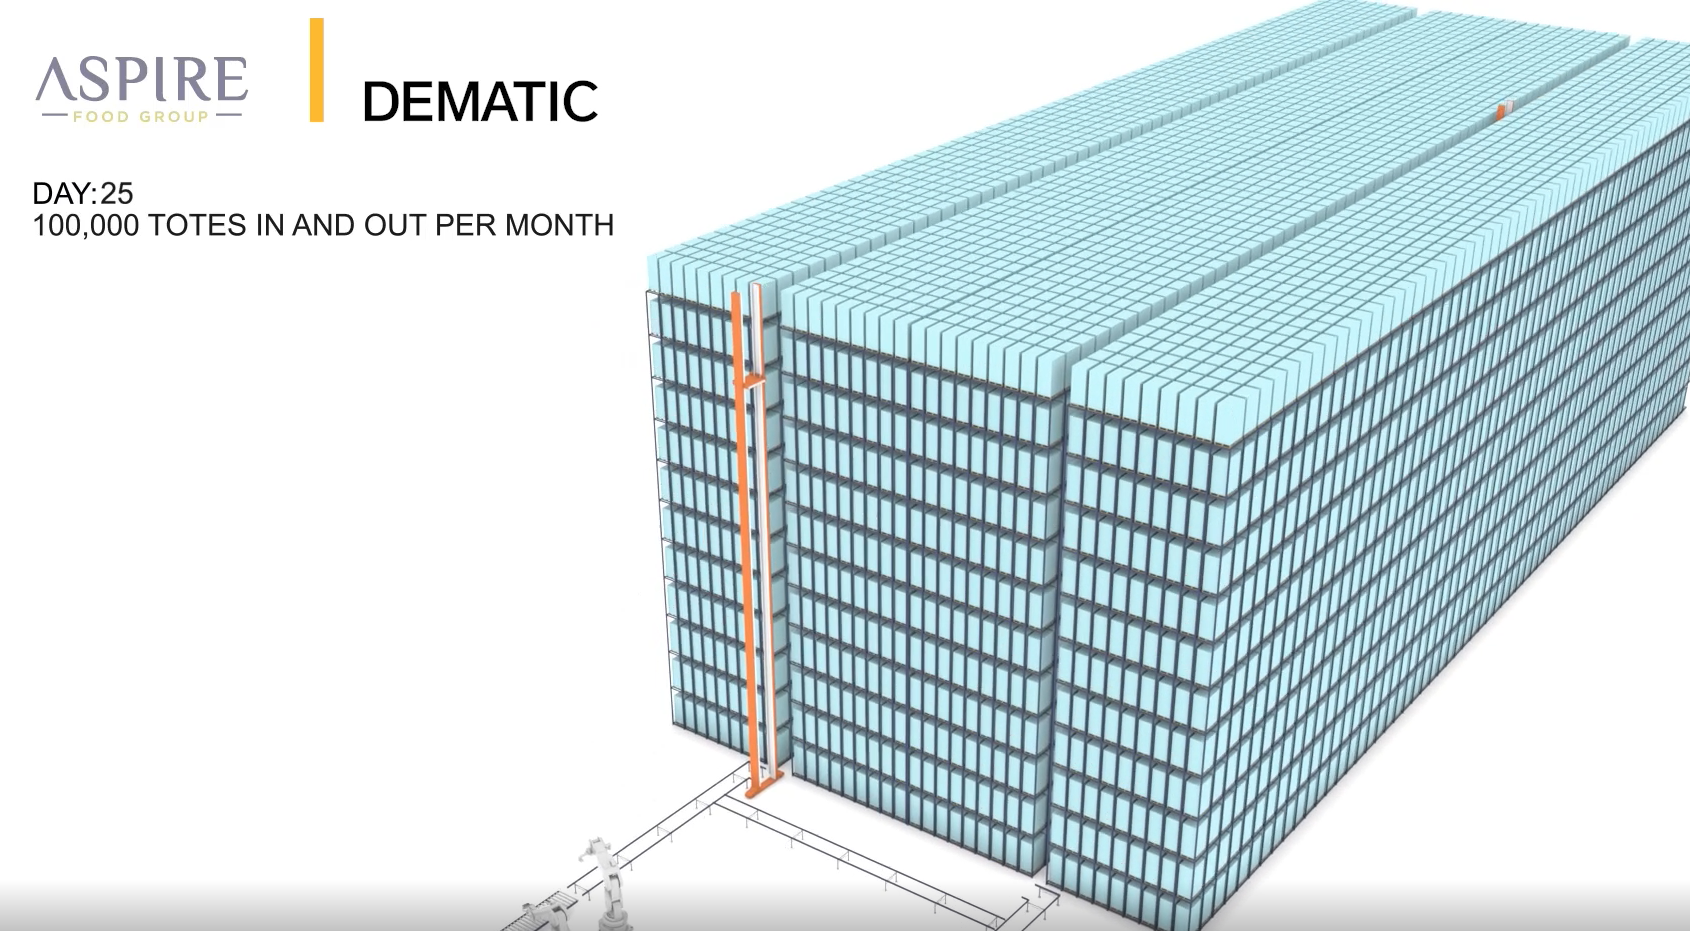 Dematic公司的高密度自动化存储系统将支持在加拿大安大略省伦敦工厂高效生产食品级昆虫蛋白